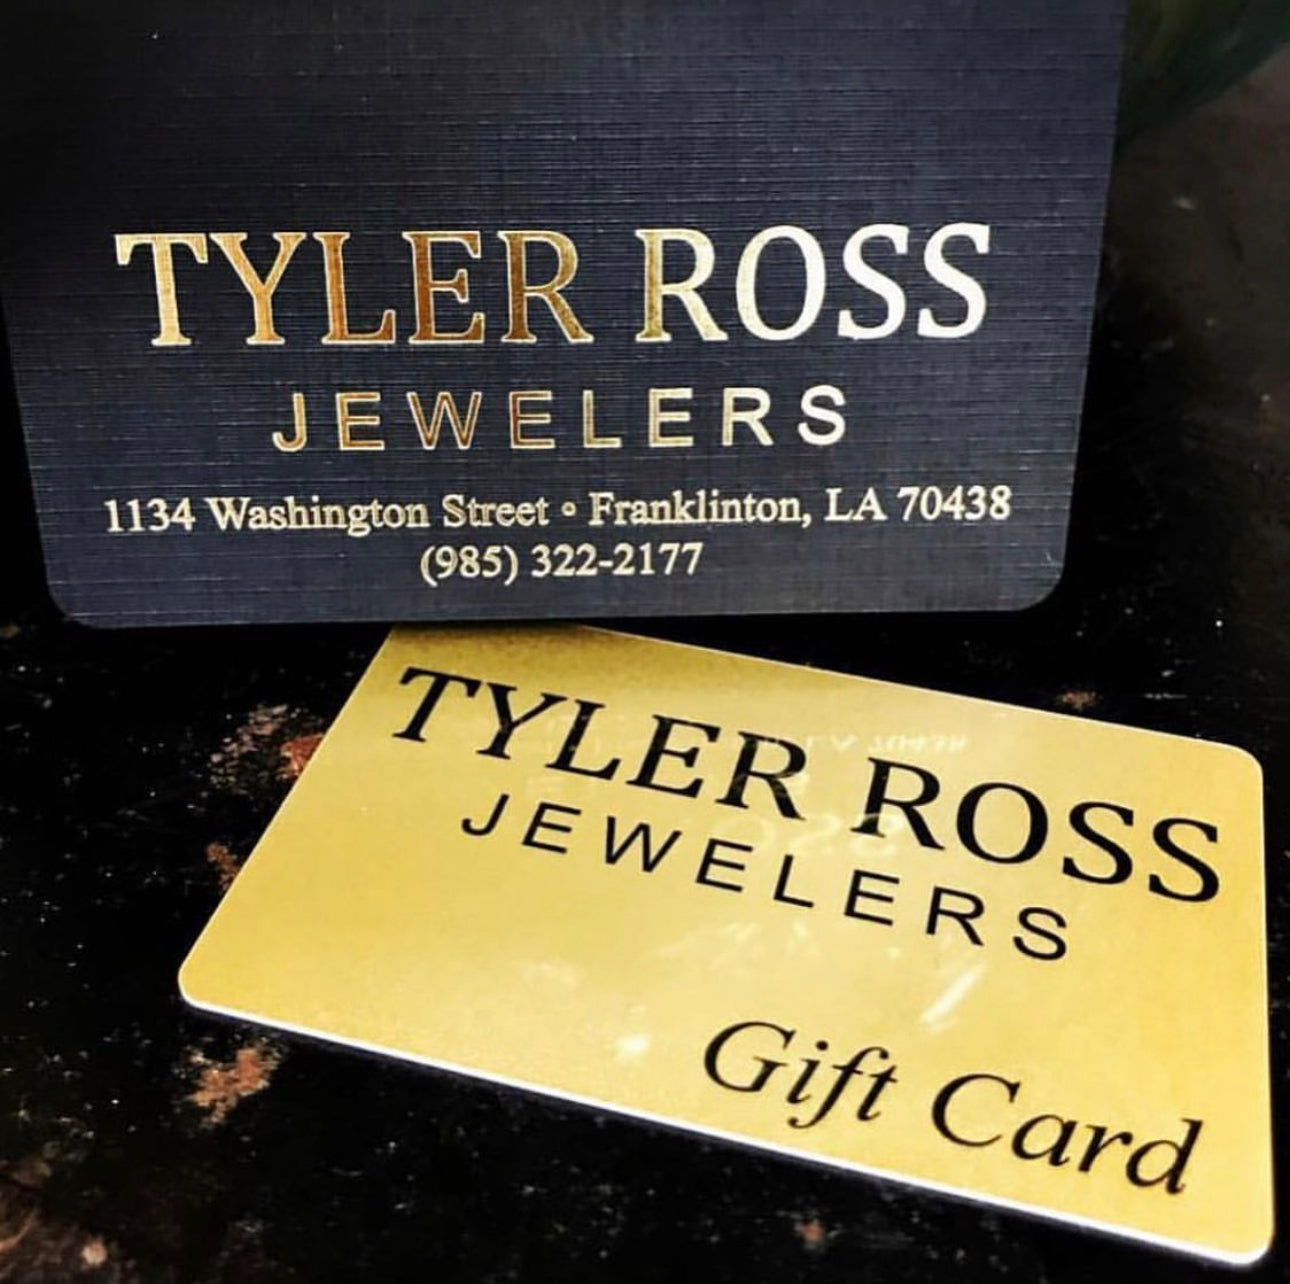 Tyler Ross Jewelers Gift Card